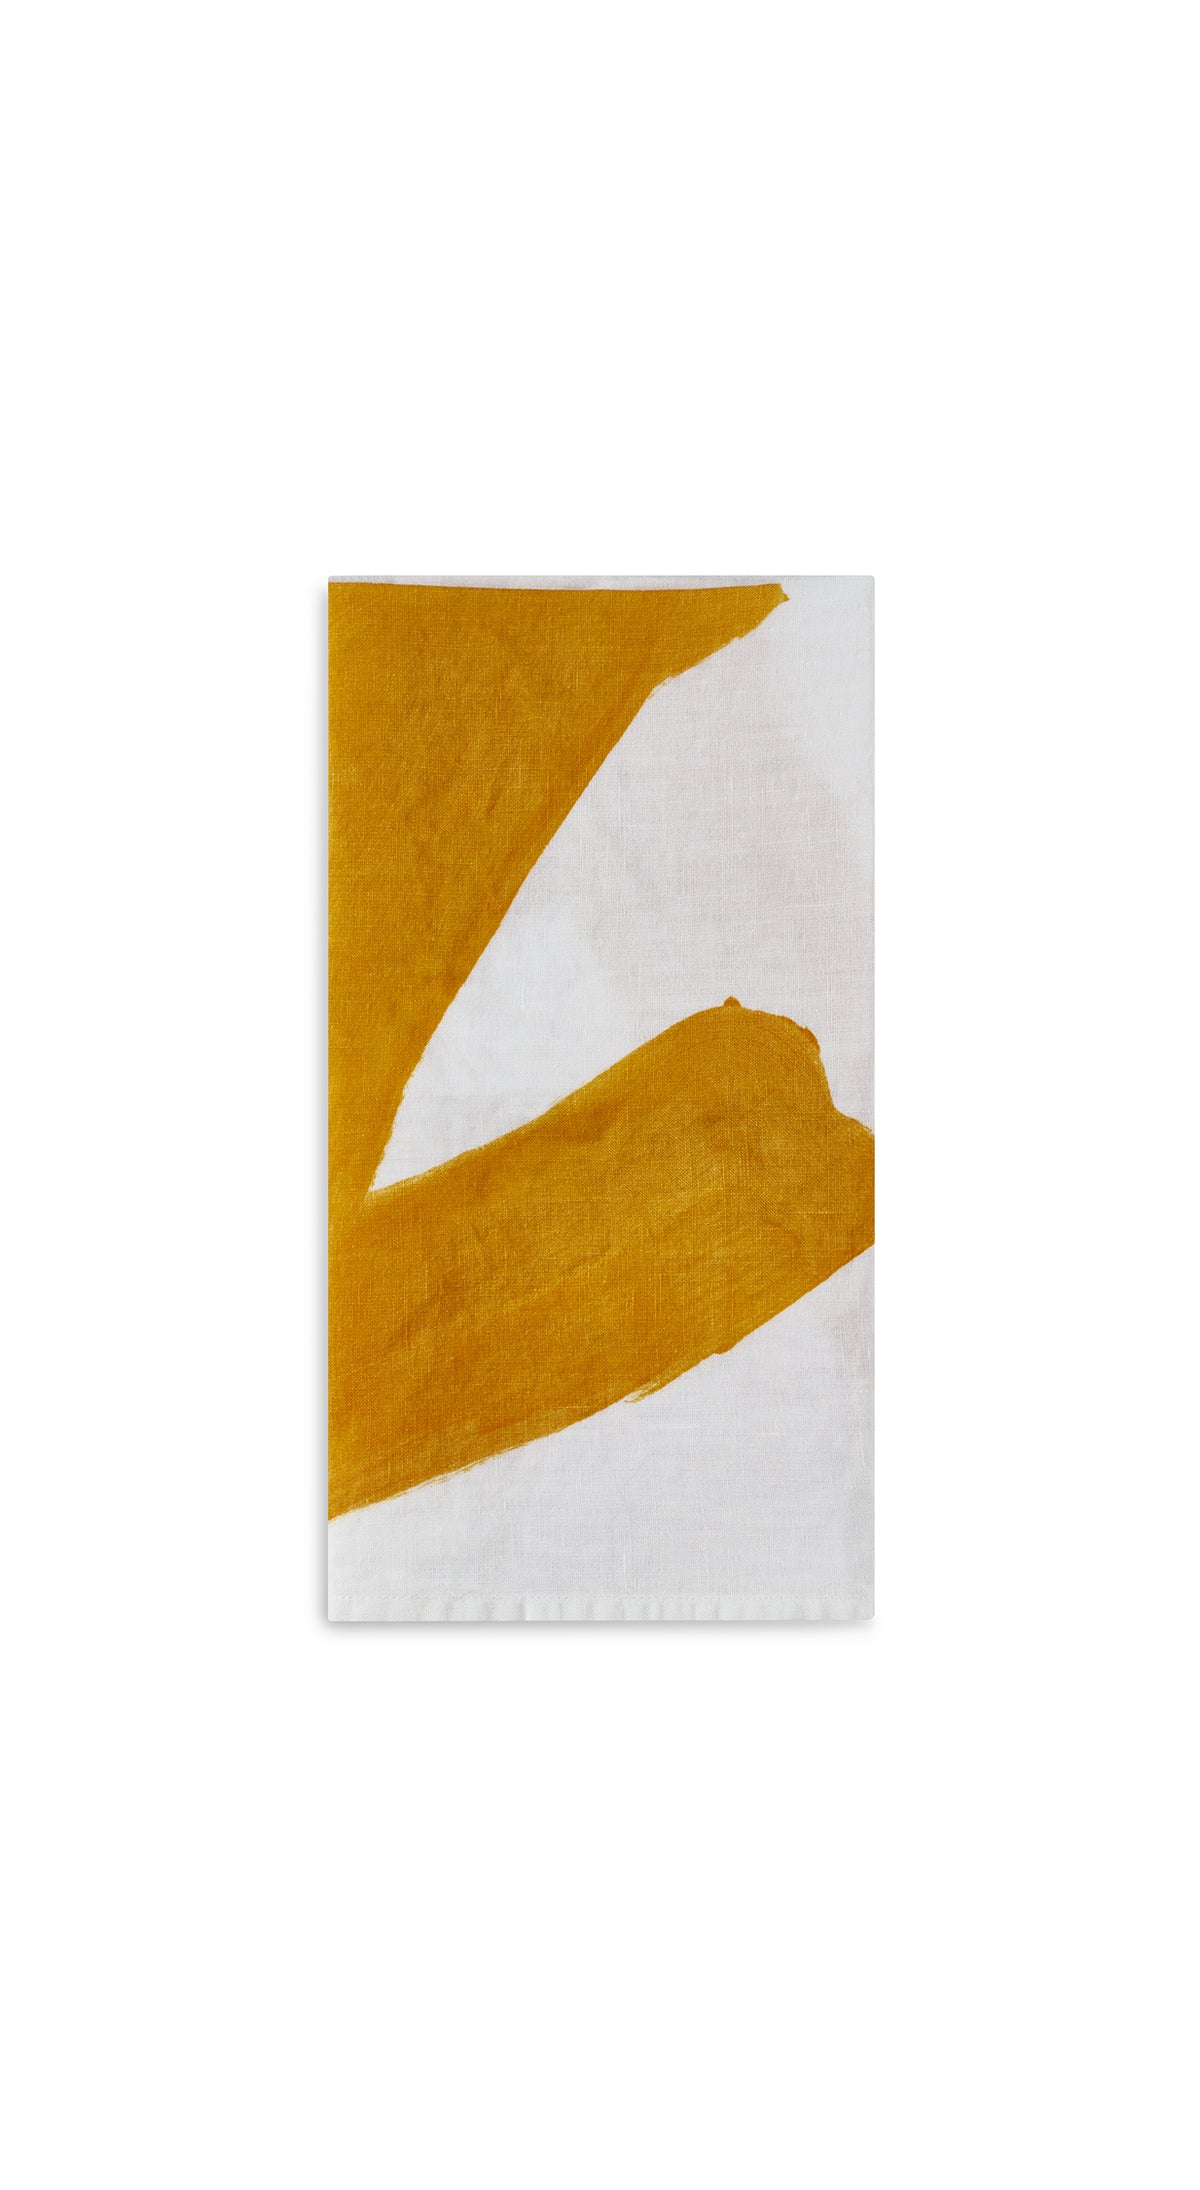 Alphabet Napkin 'R' in Mustard Yellow, 50x50cm